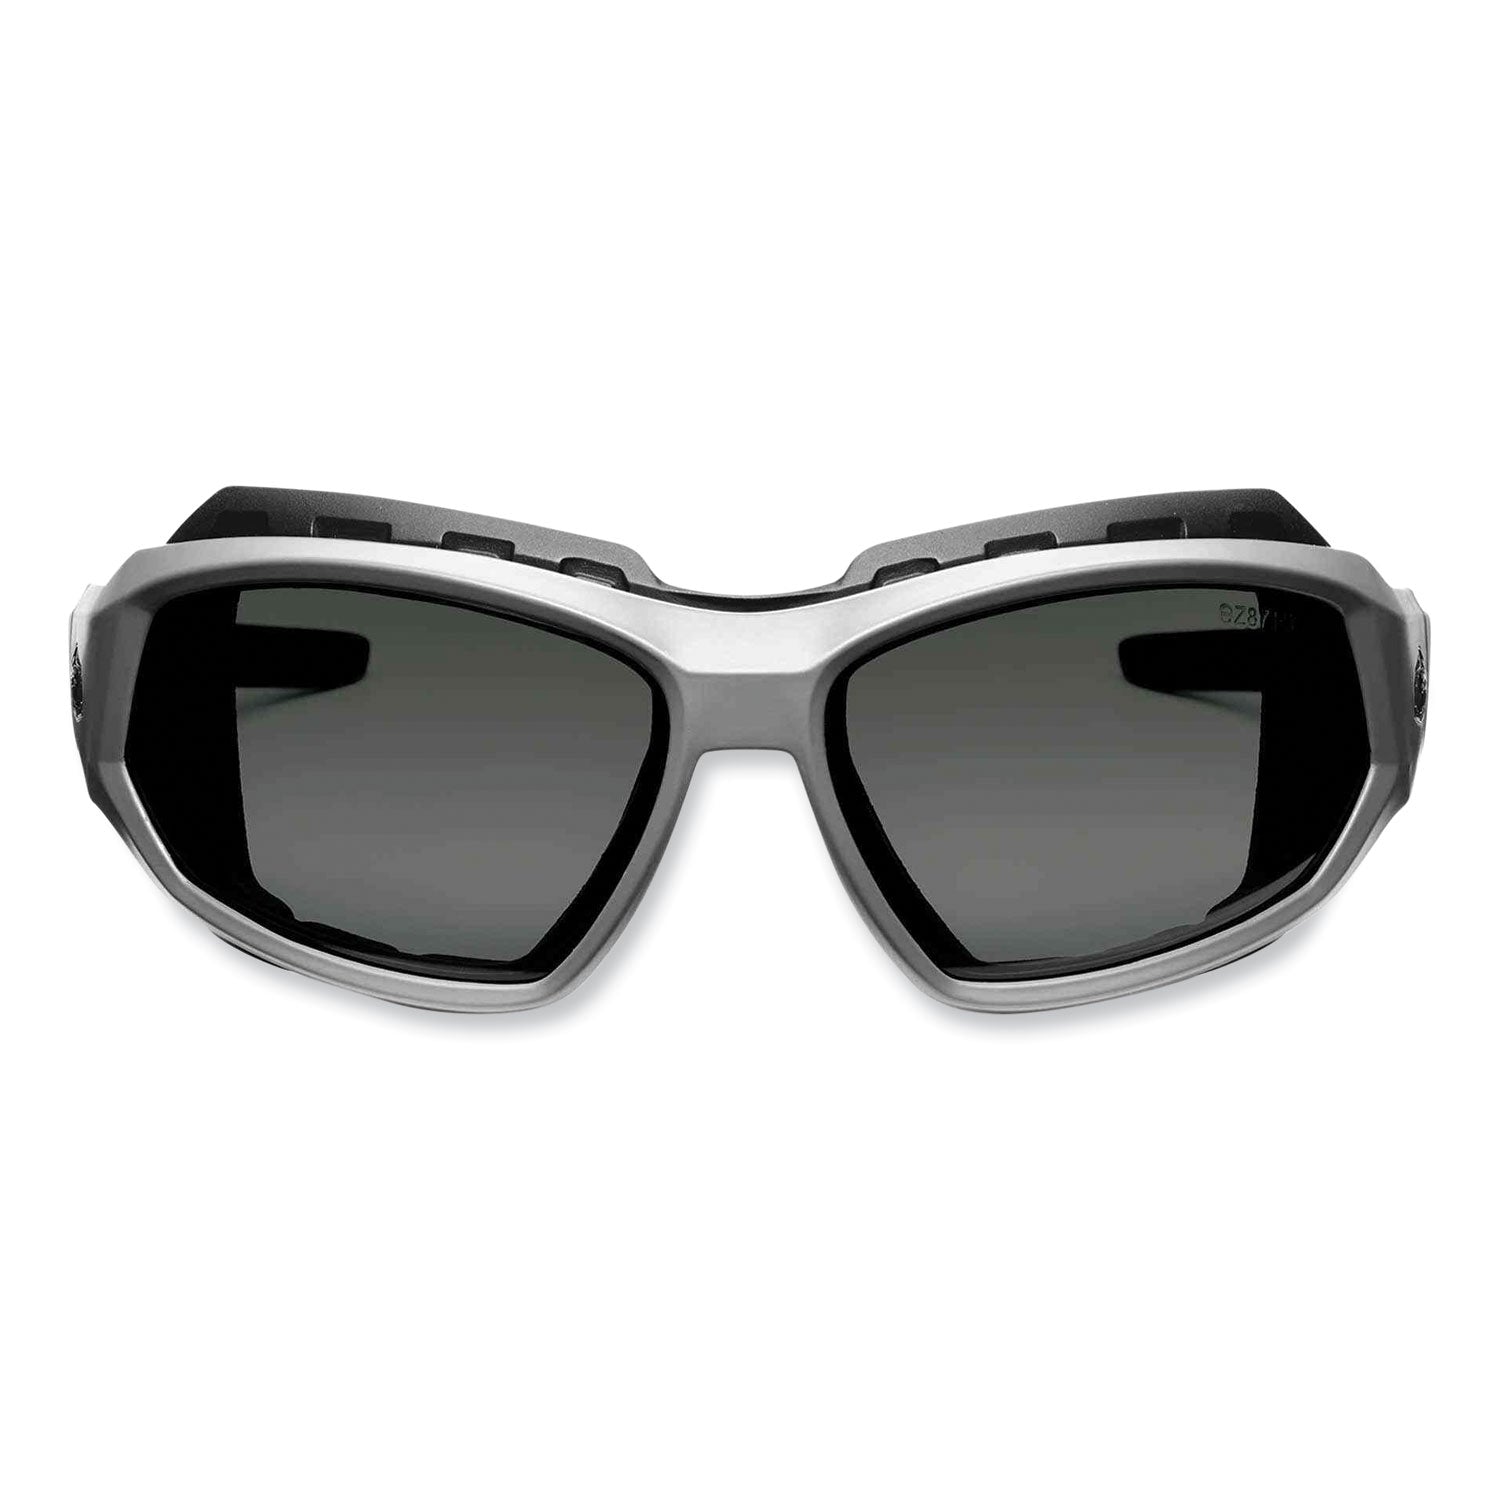 skullerz-loki-safety-glasses-goggles-matte-gray-nylon-impact-frame-polarized-smoke-polycarb-lensships-in-1-3-business-days_ego56131 - 6